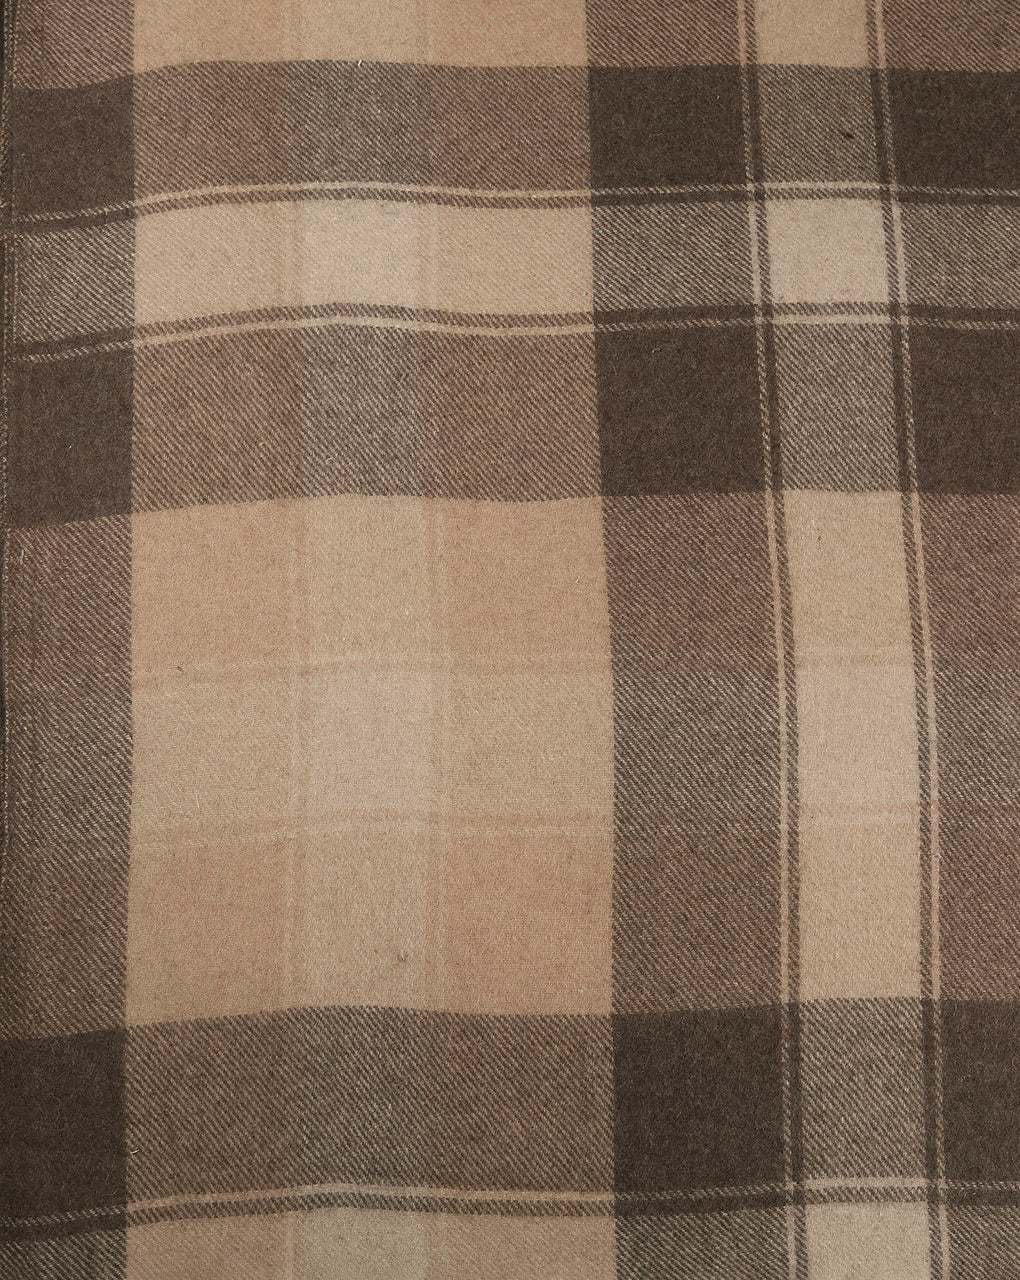 Tartan Checks Woolen Tweed Fabric - Fabriclore.com